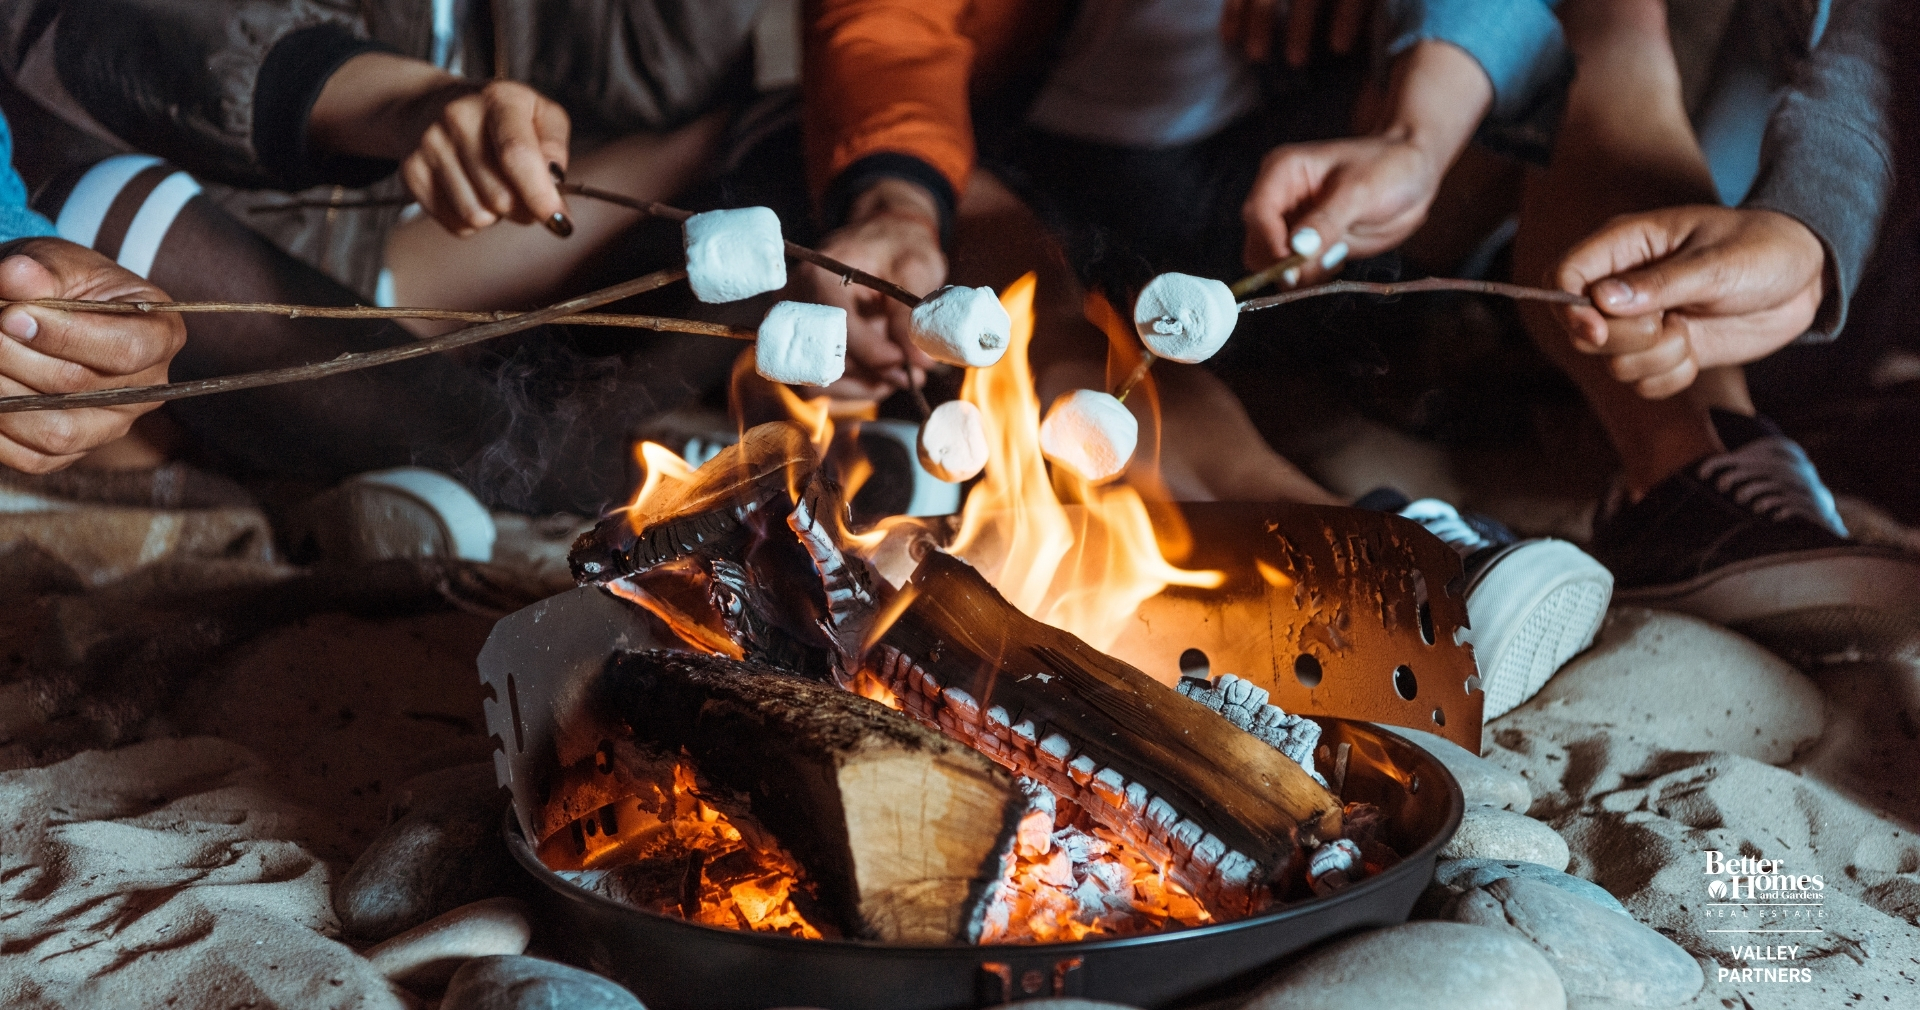 Fire Pit/Roasting Marshmallows